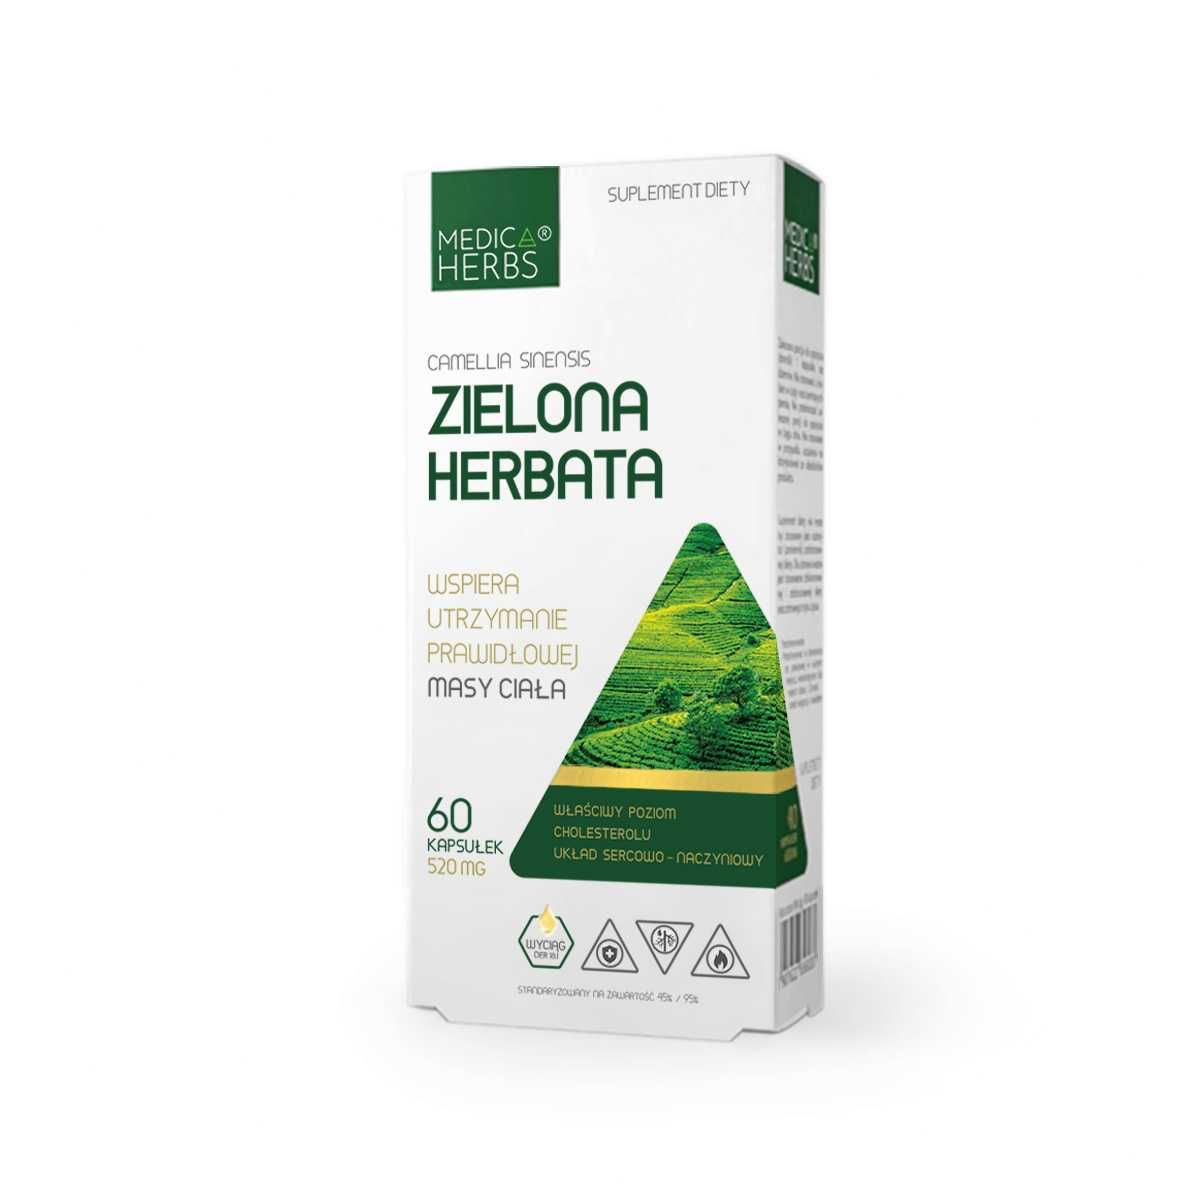 3 opakowania Medica Herbs - Zielona Herbata, 60 kapsułek, 520 mg.